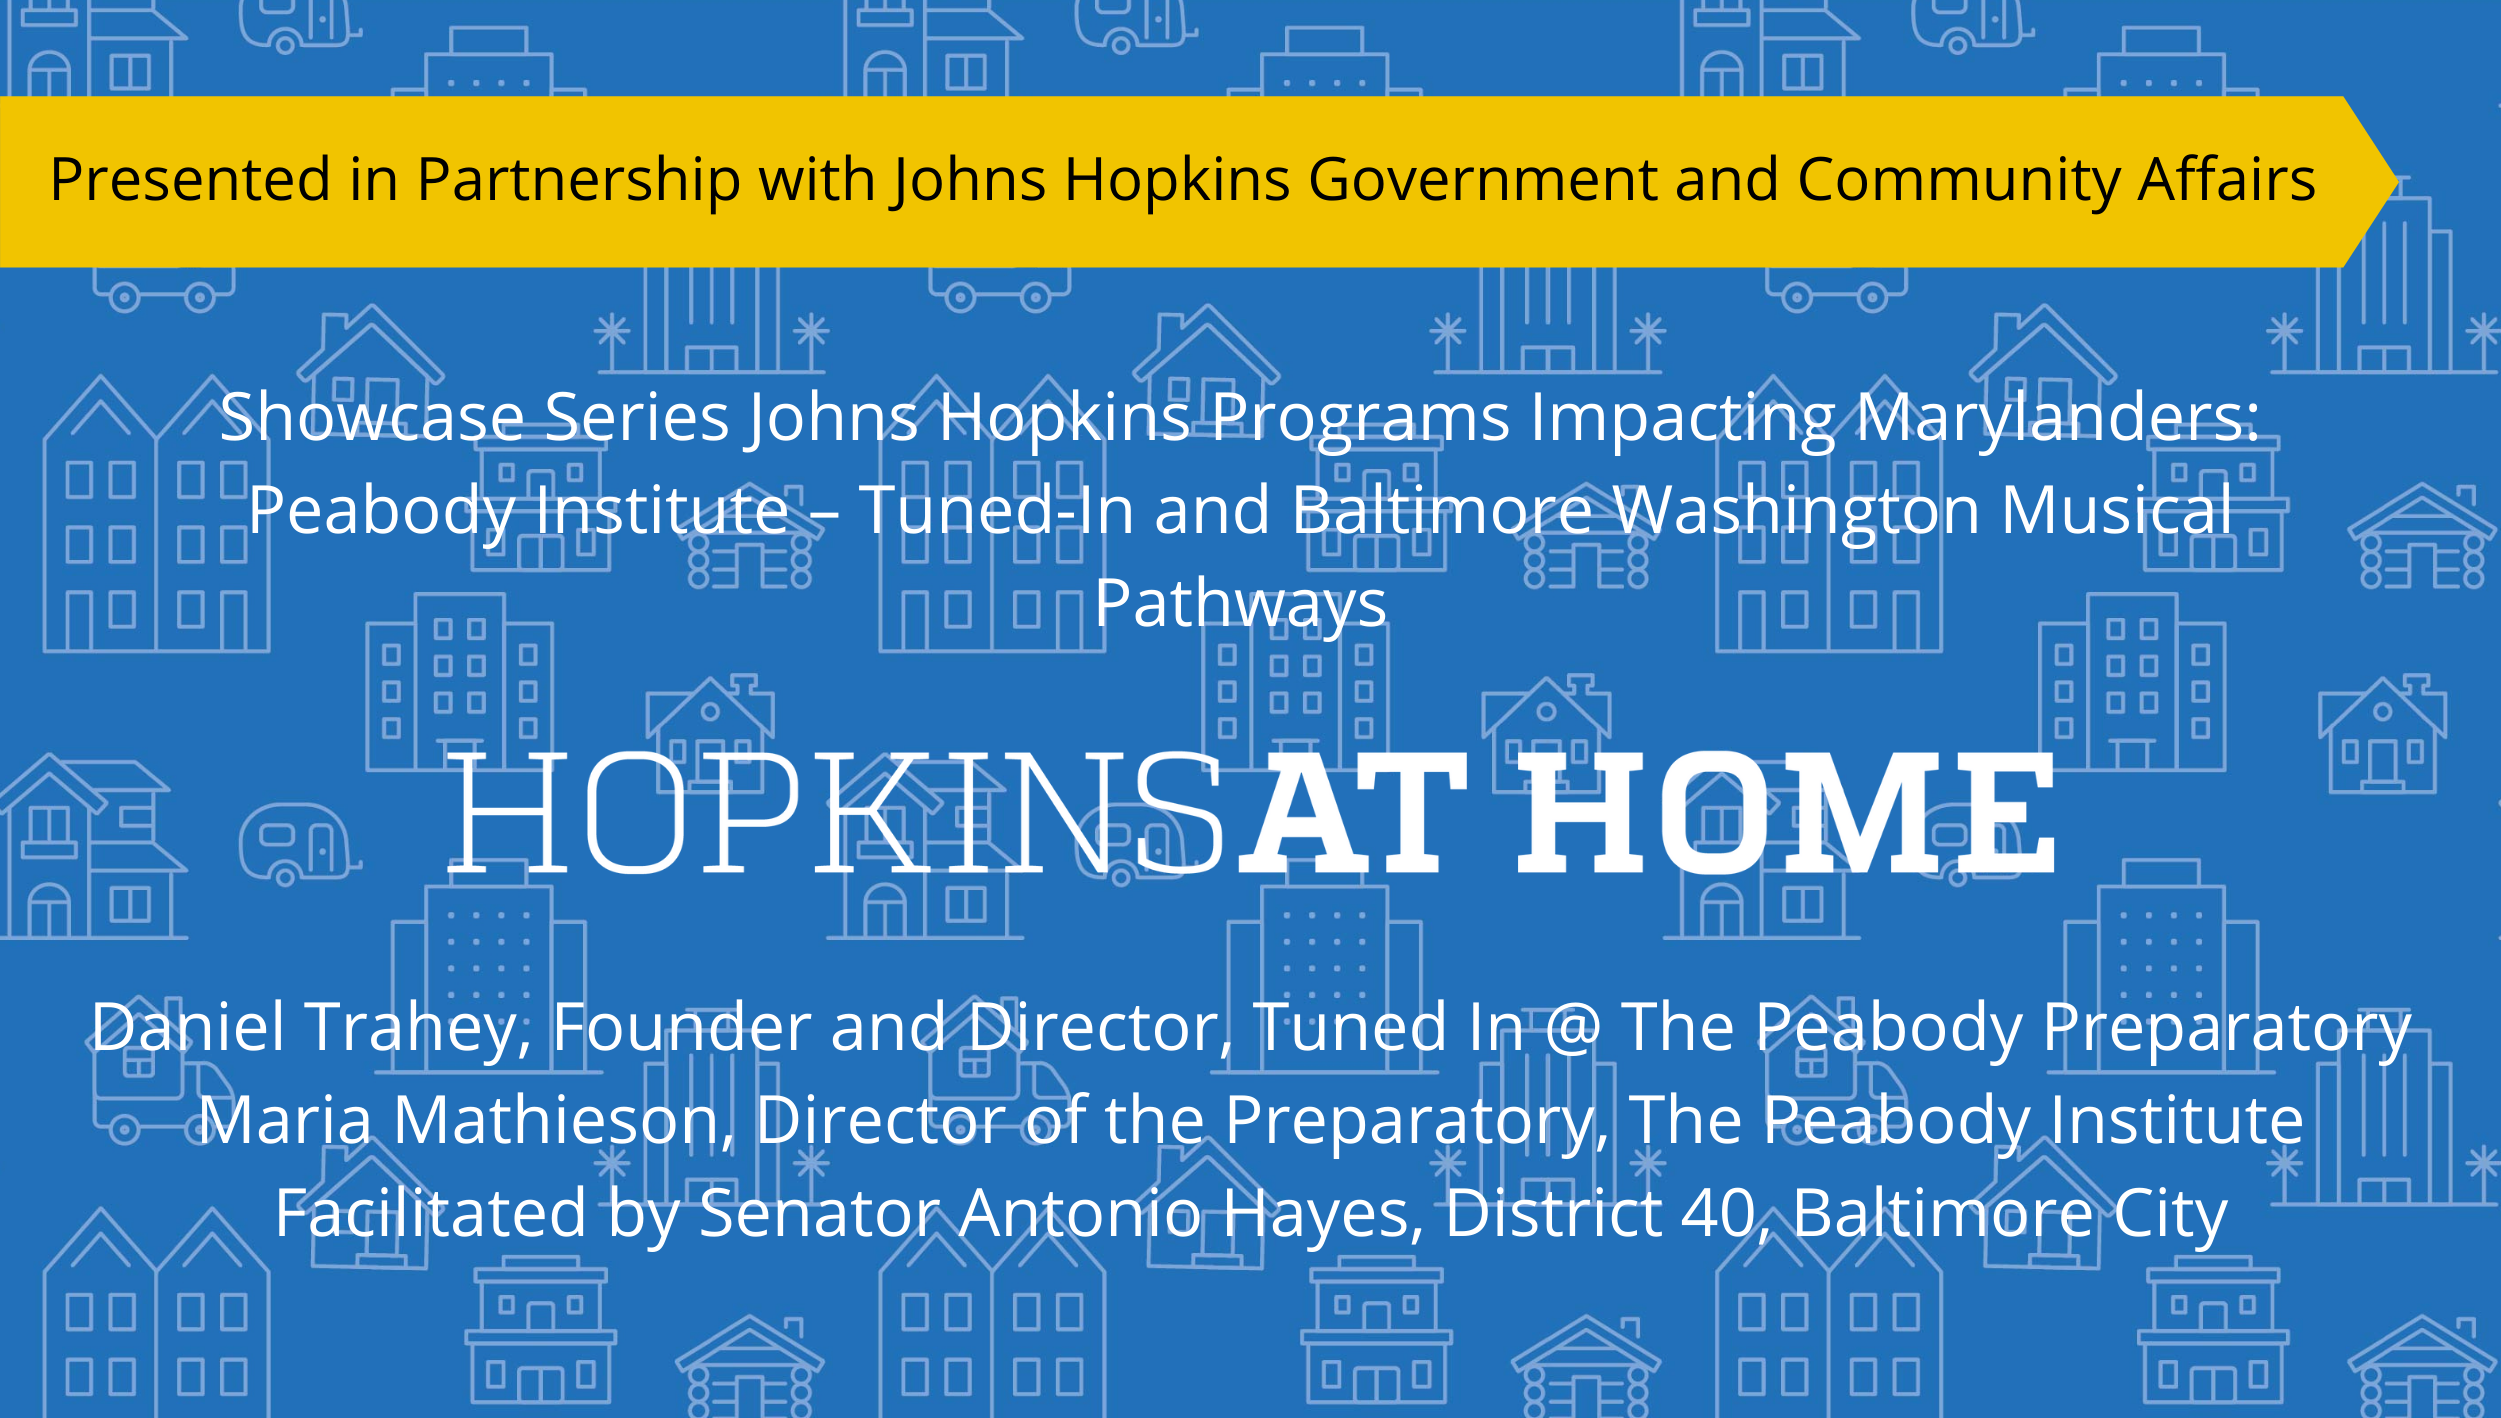 Showcase Series Johns Hopkins Programs Impacting Marylanders: Peabody Institute – Tuned-In and Baltimore Washington Musical Pathways